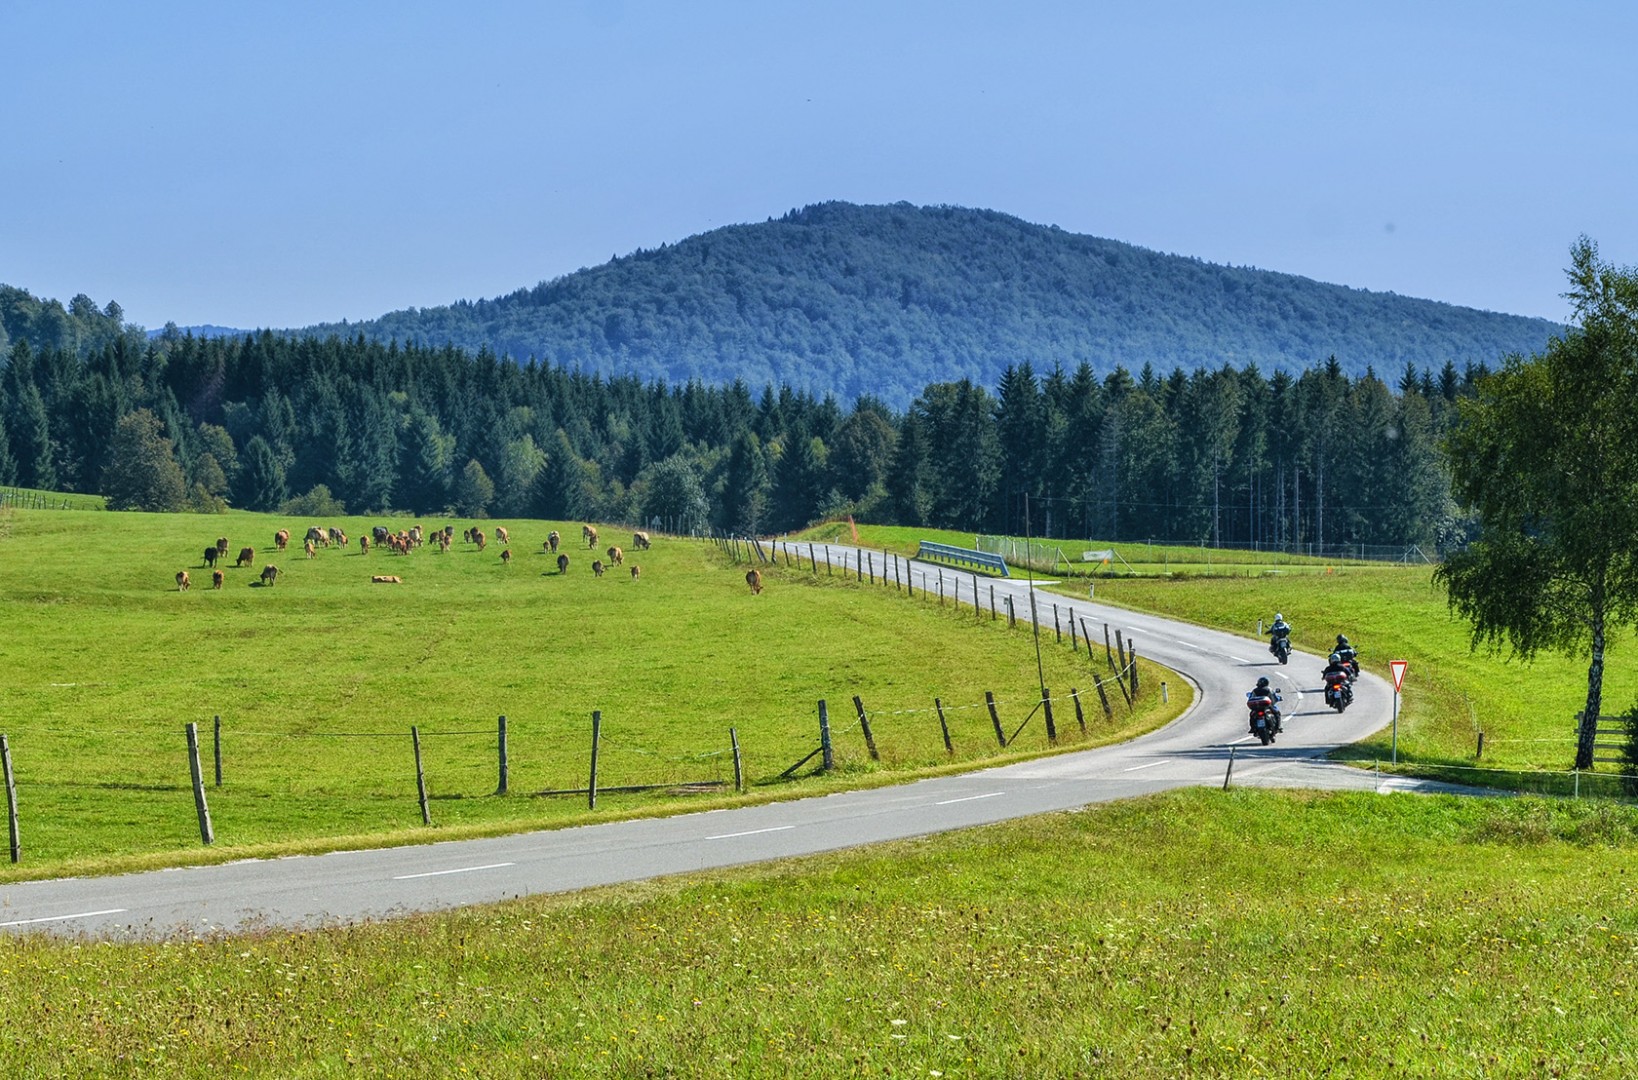 Ruta En Moto Eslovenia